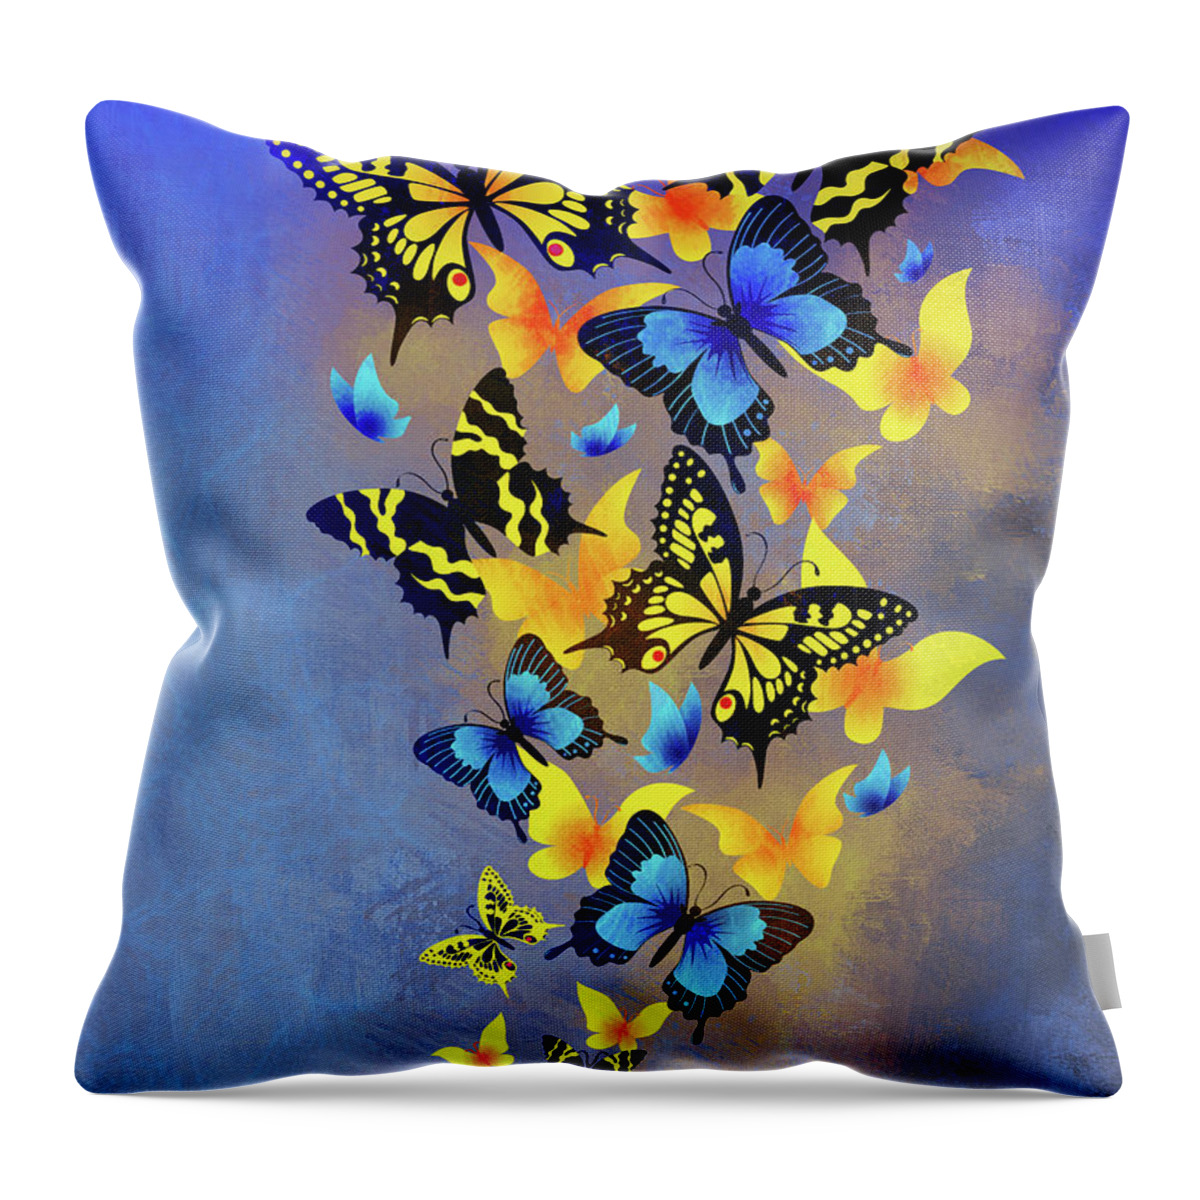 Heavenly Butterflies Throw Pillow featuring the mixed media Heavenly Butterflies Contemporary Art by Georgiana Romanovna